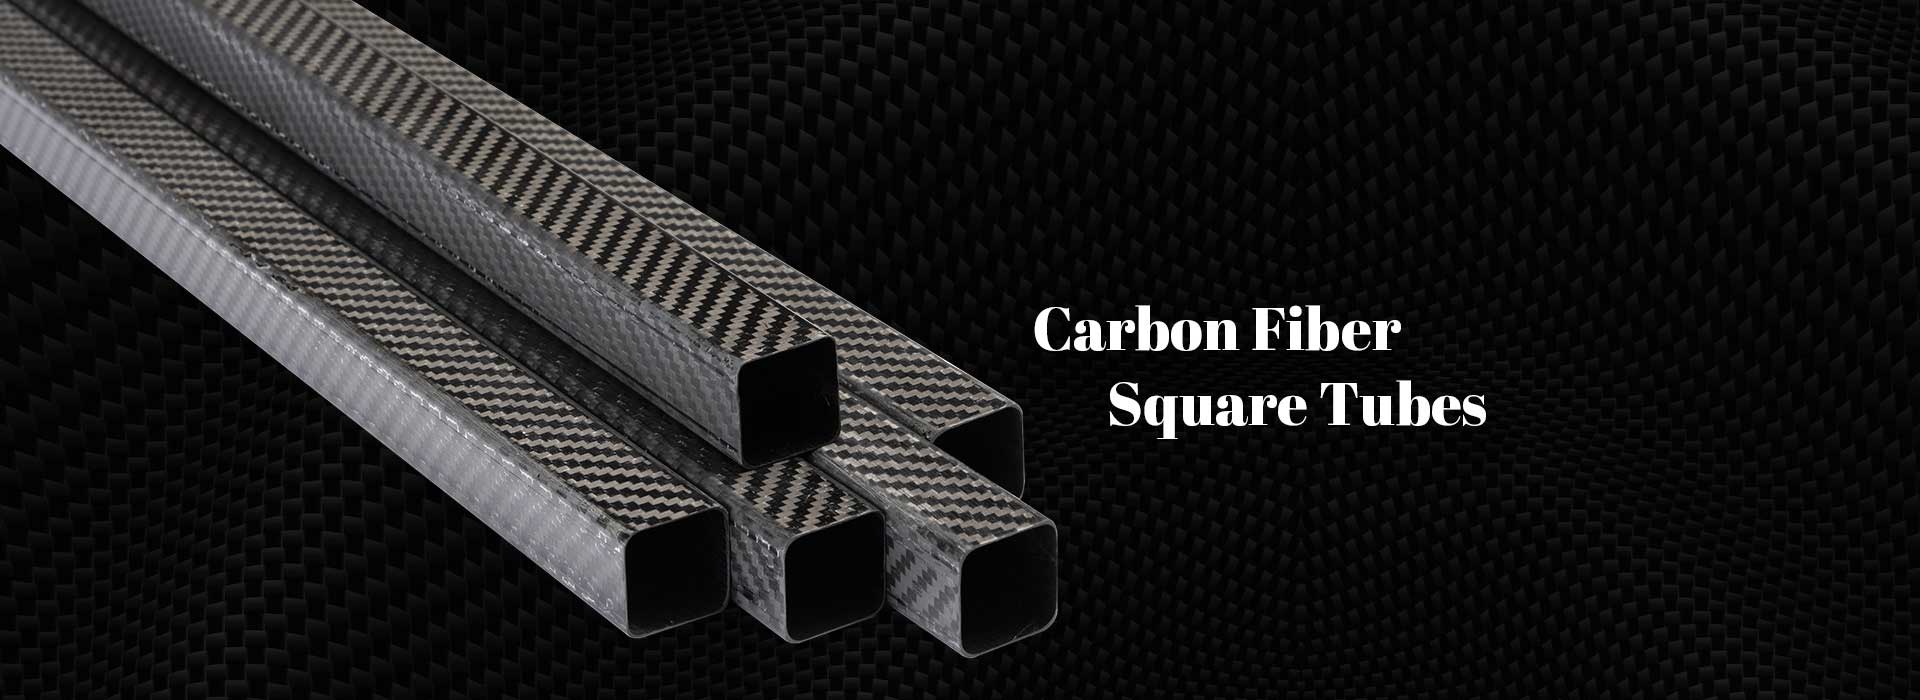 Carbon Fiber Square Tubes